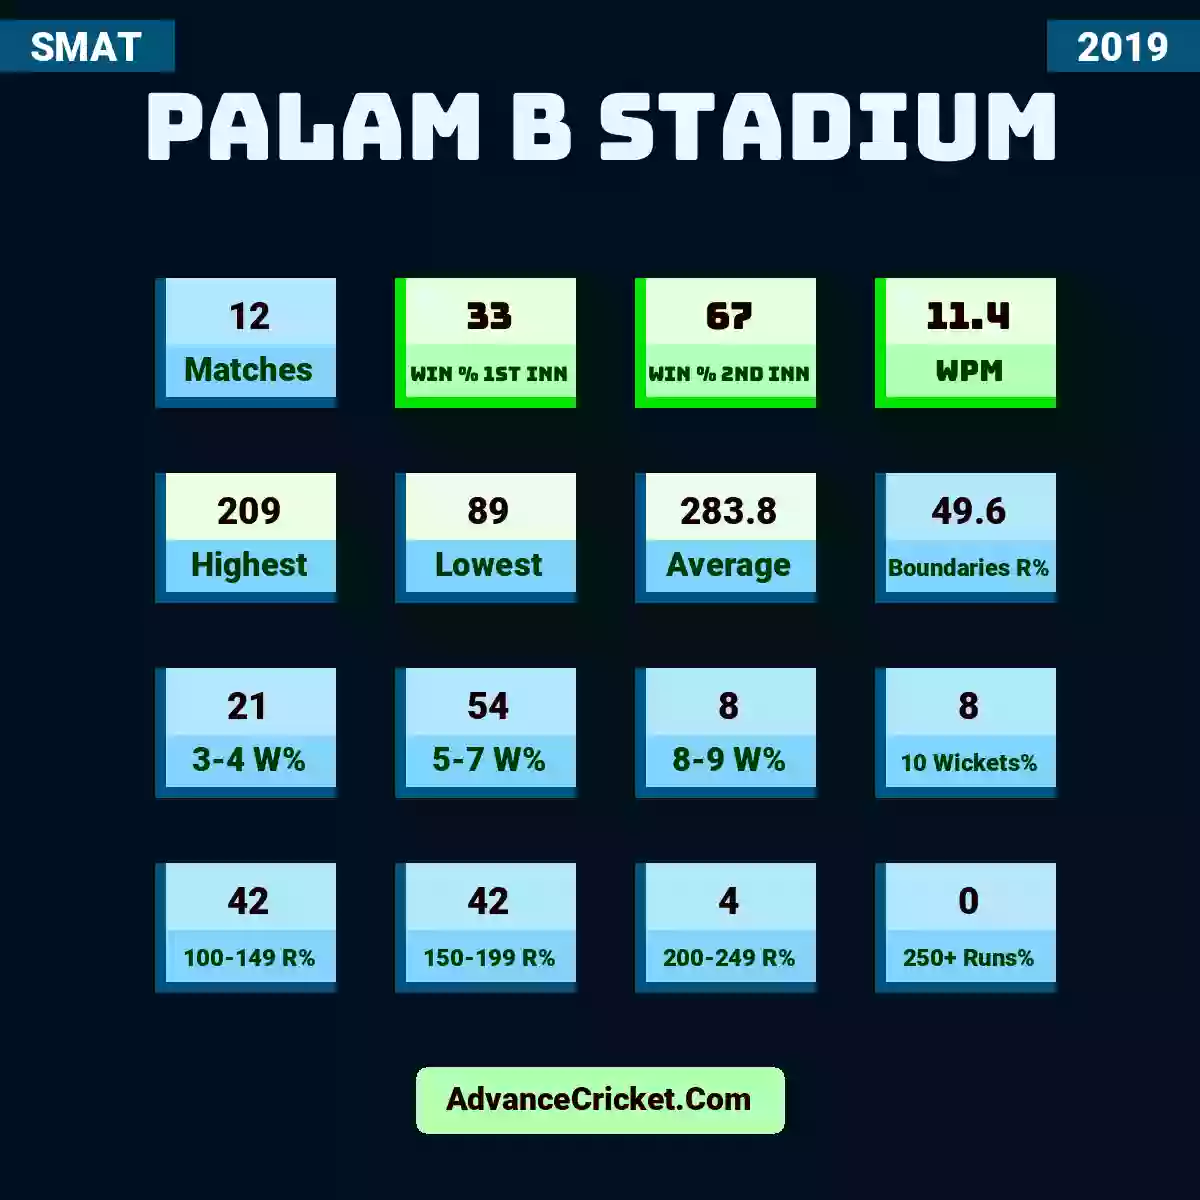 Image showing Palam B Stadium with Matches: 12, Win % 1st Inn: 33, Win % 2nd Inn: 67, WPM: 11.4, Highest: 209, Lowest: 89, Average: 283.8, Boundaries R%: 49.6, 3-4 W%: 21, 5-7 W%: 54, 8-9 W%: 8, 10 Wickets%: 8, 100-149 R%: 42, 150-199 R%: 42, 200-249 R%: 4, 250+ Runs%: 0.